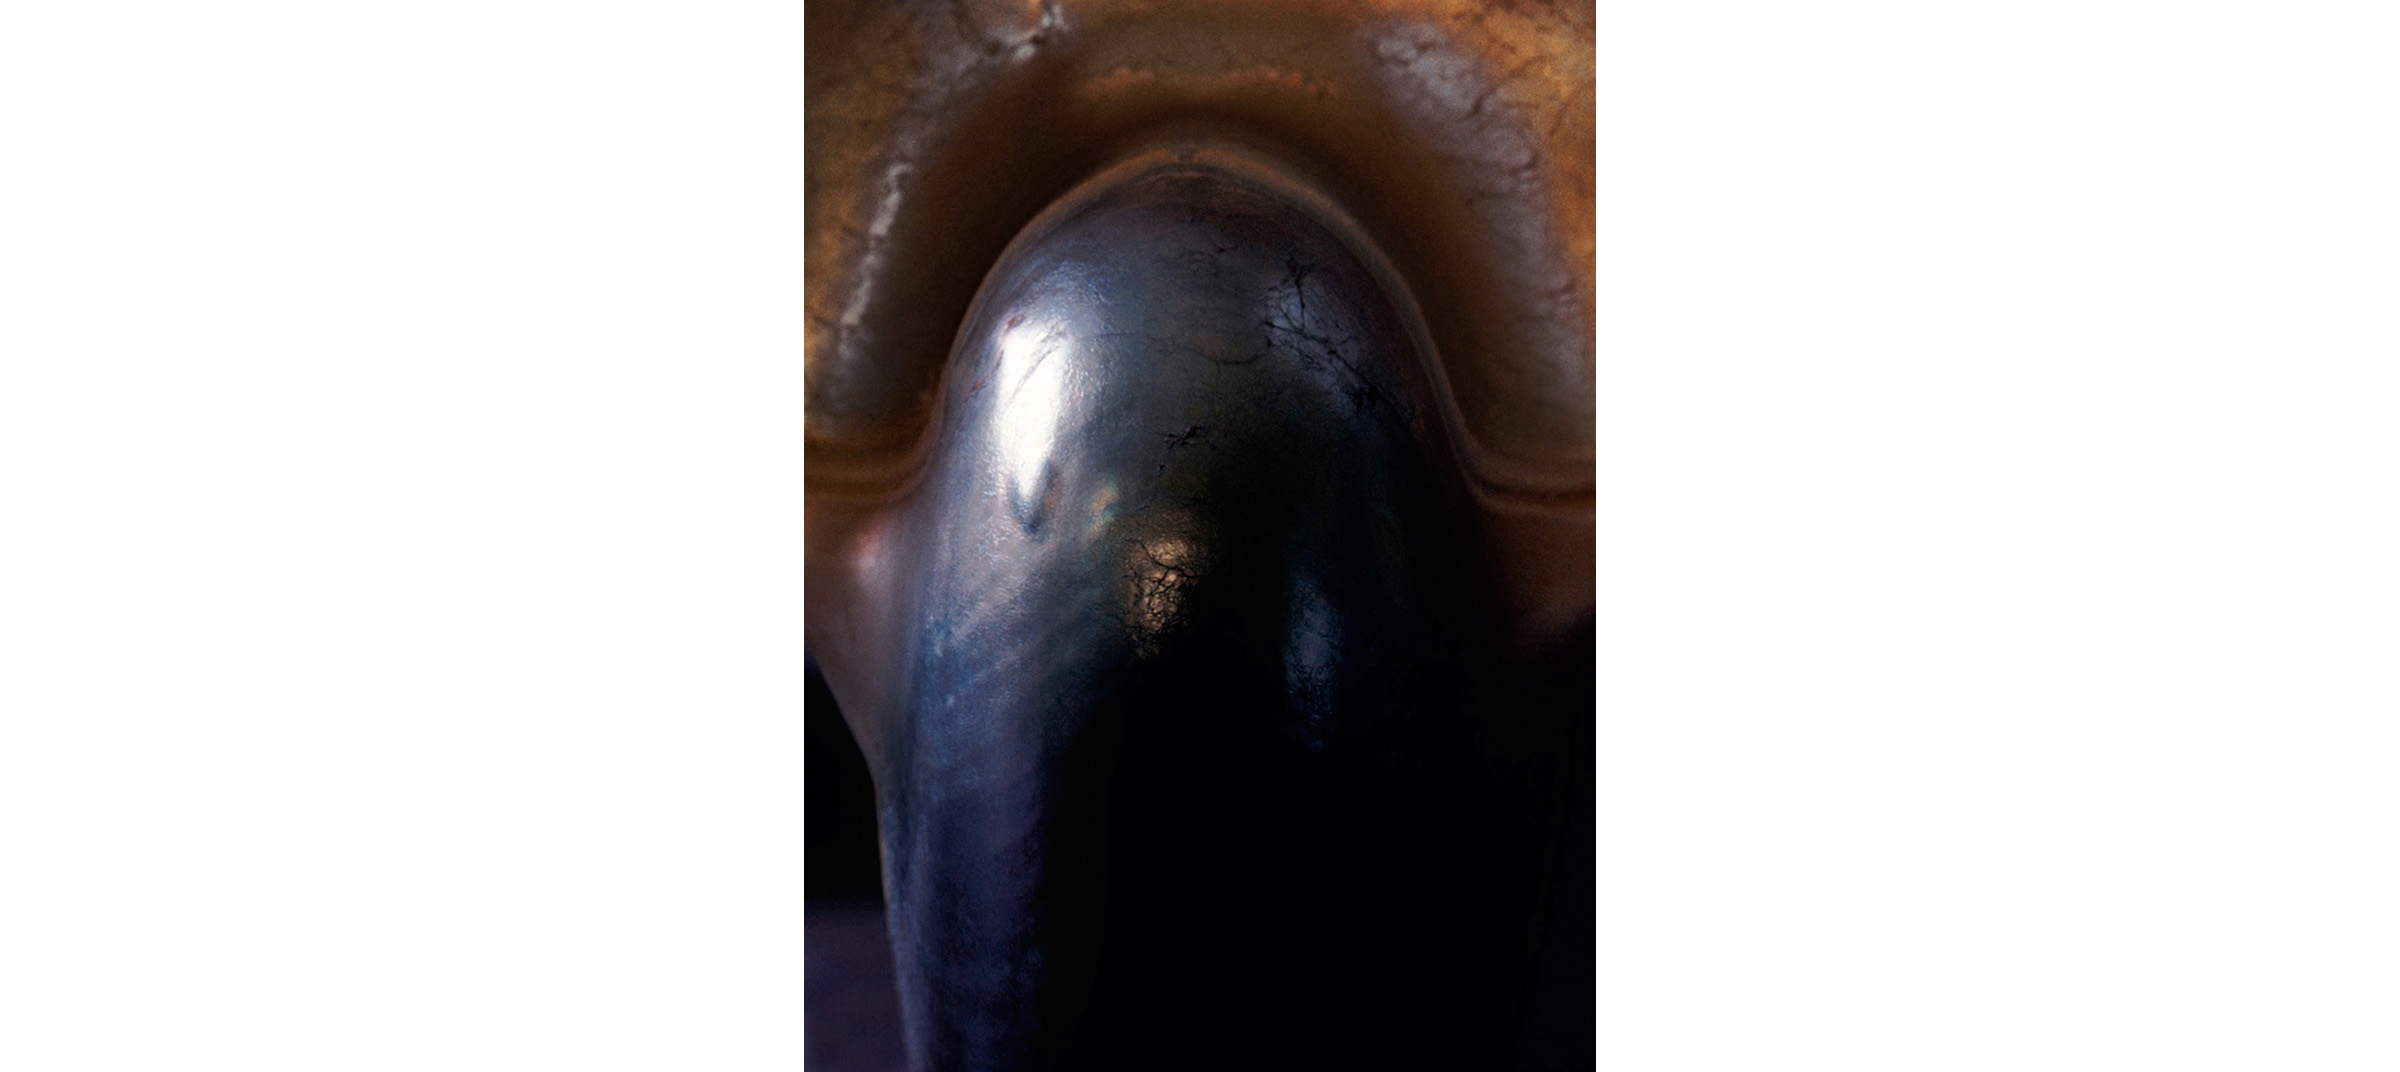   Flesh  Untitled N°7, 2004/2015   Tirage argentique sur duratrans, caisson lumineux 144 x 104 cm | C-print on duratrans, light box, 56,69 x 40,94 inches  2/4 